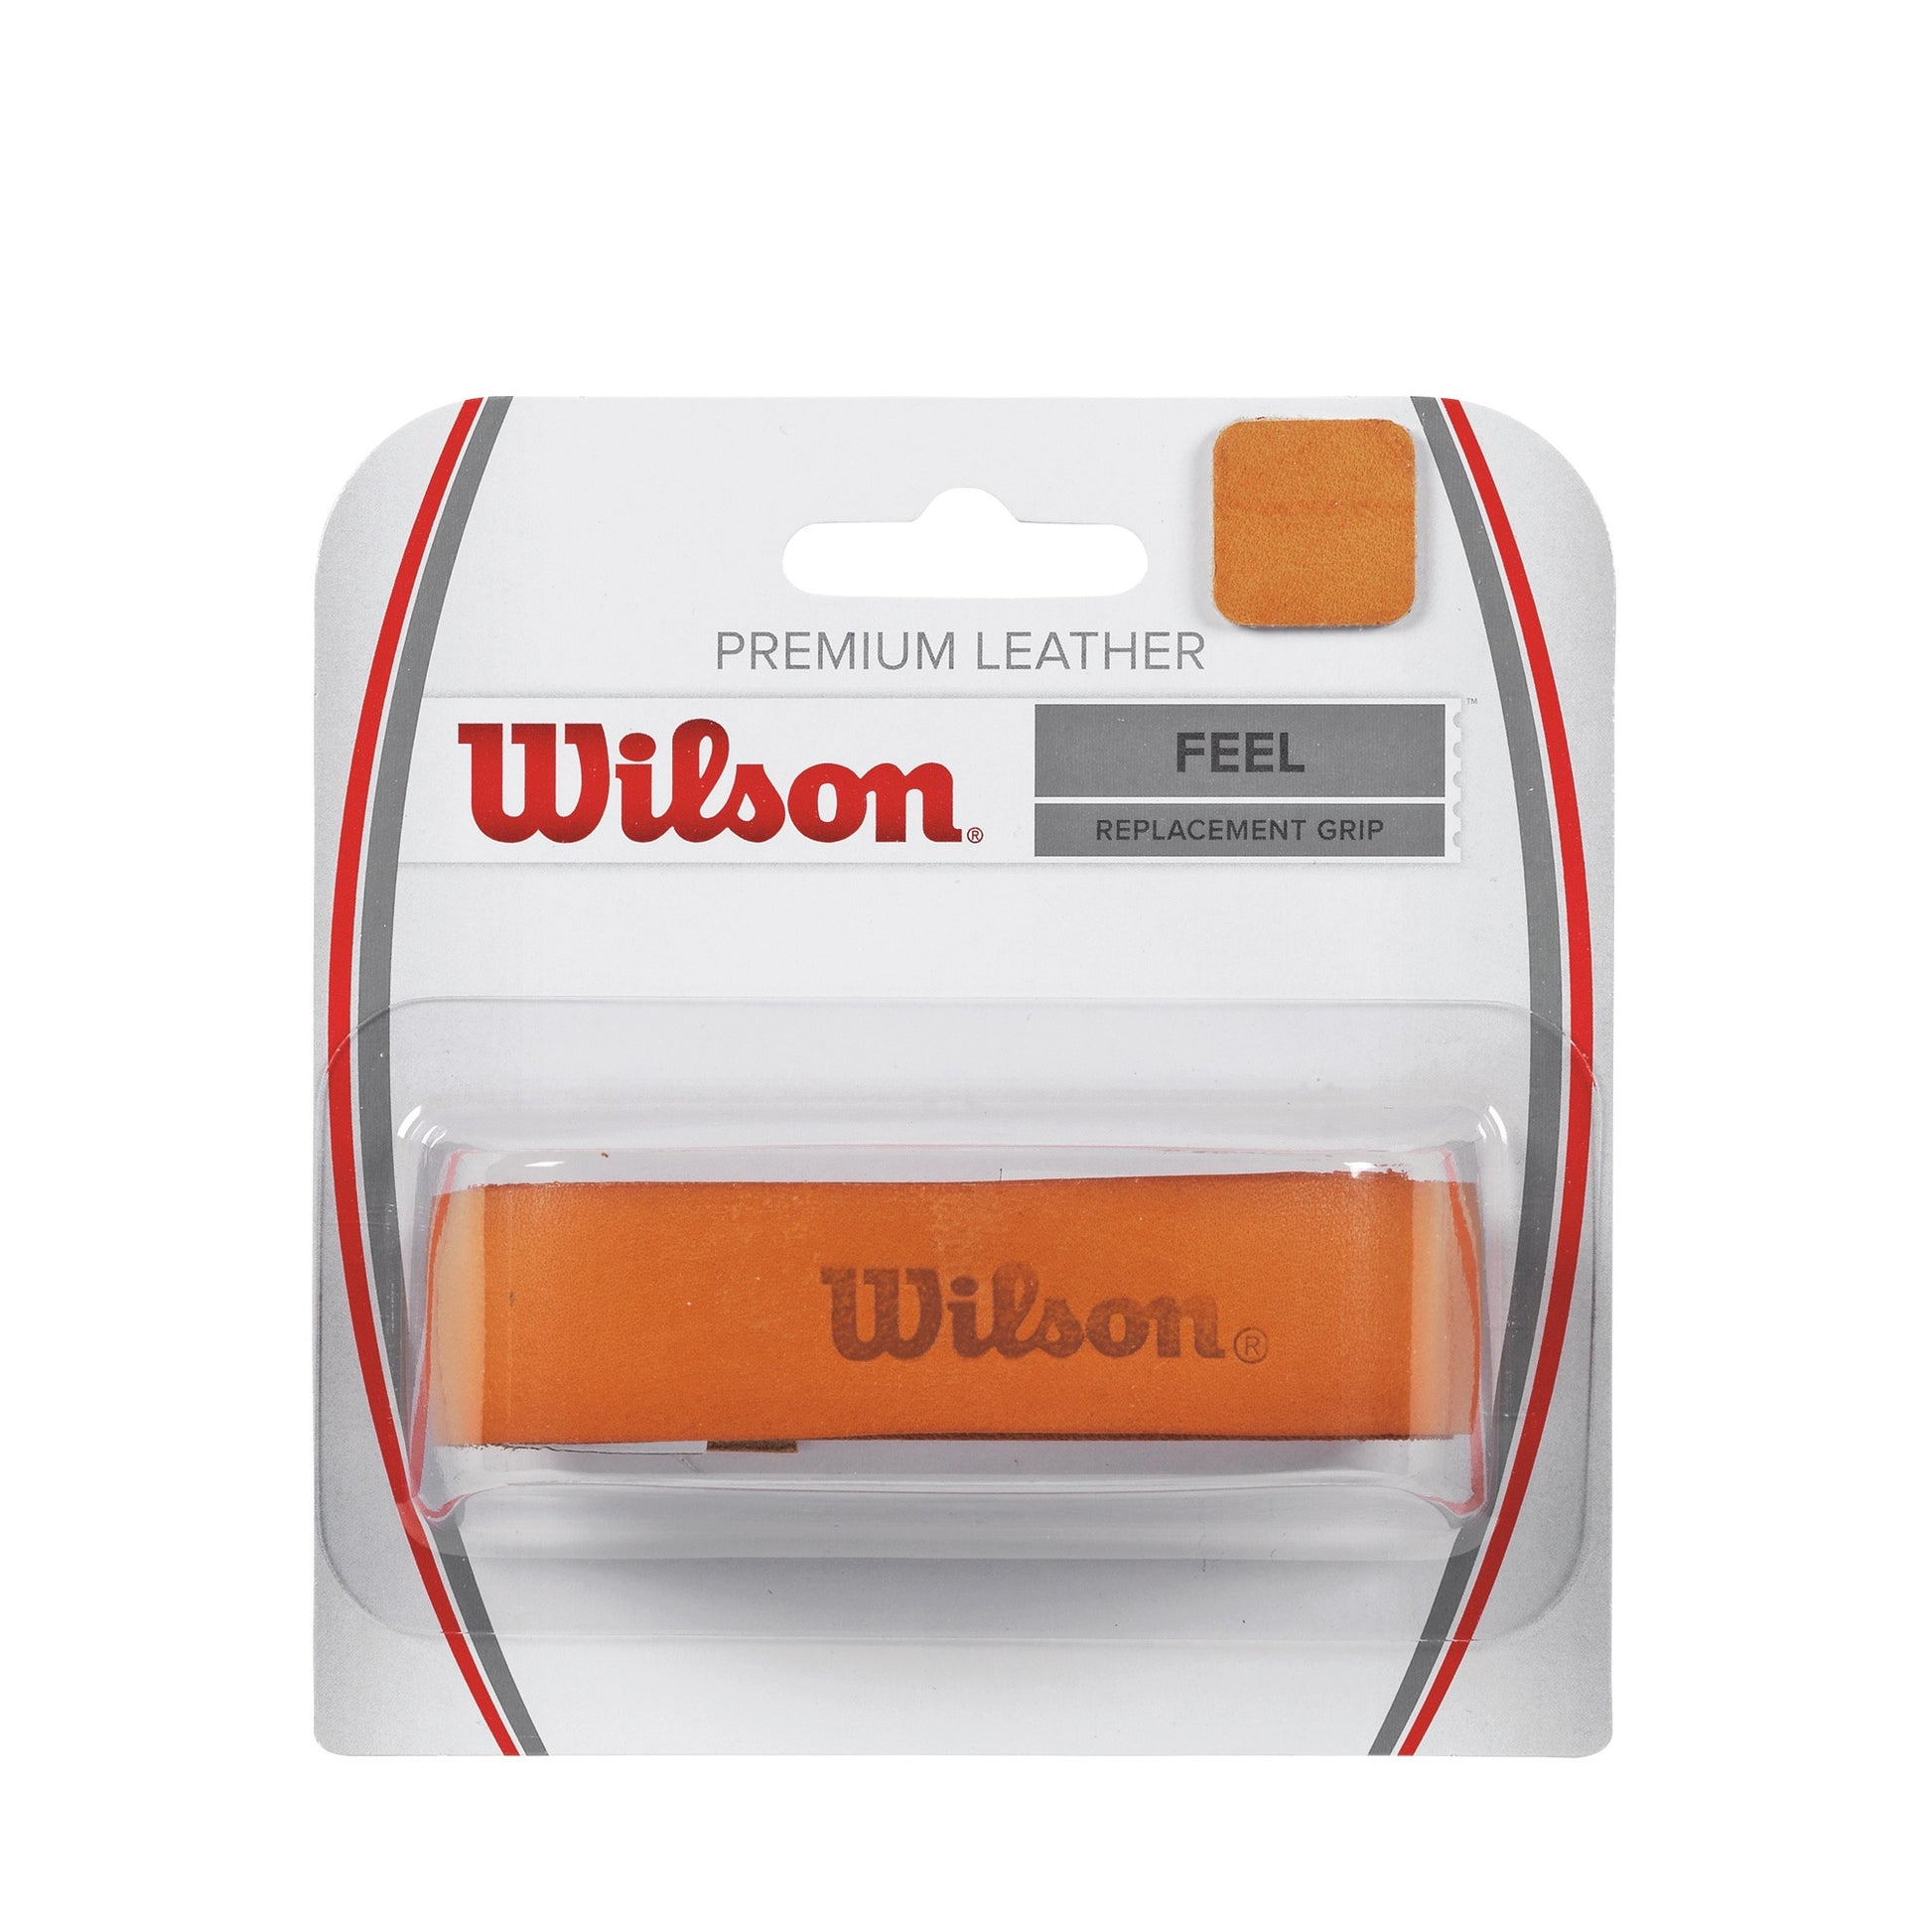 Wilson Premium Leather tennis replacement grip - VuTennis